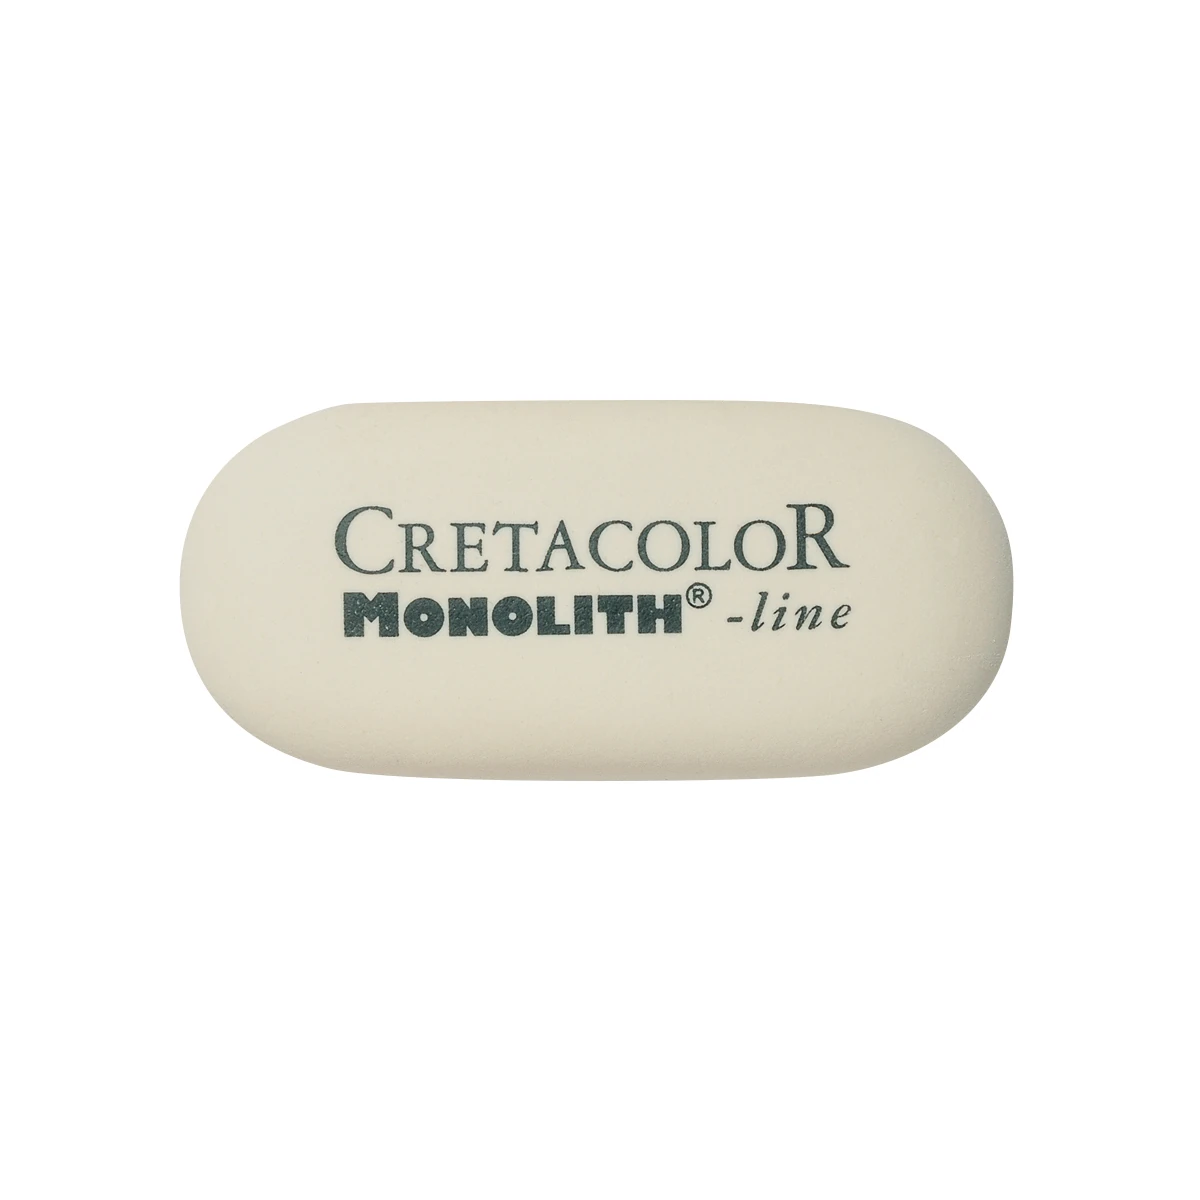 Cretacolor Monolith Small Eraser / Rubber - Lifestory